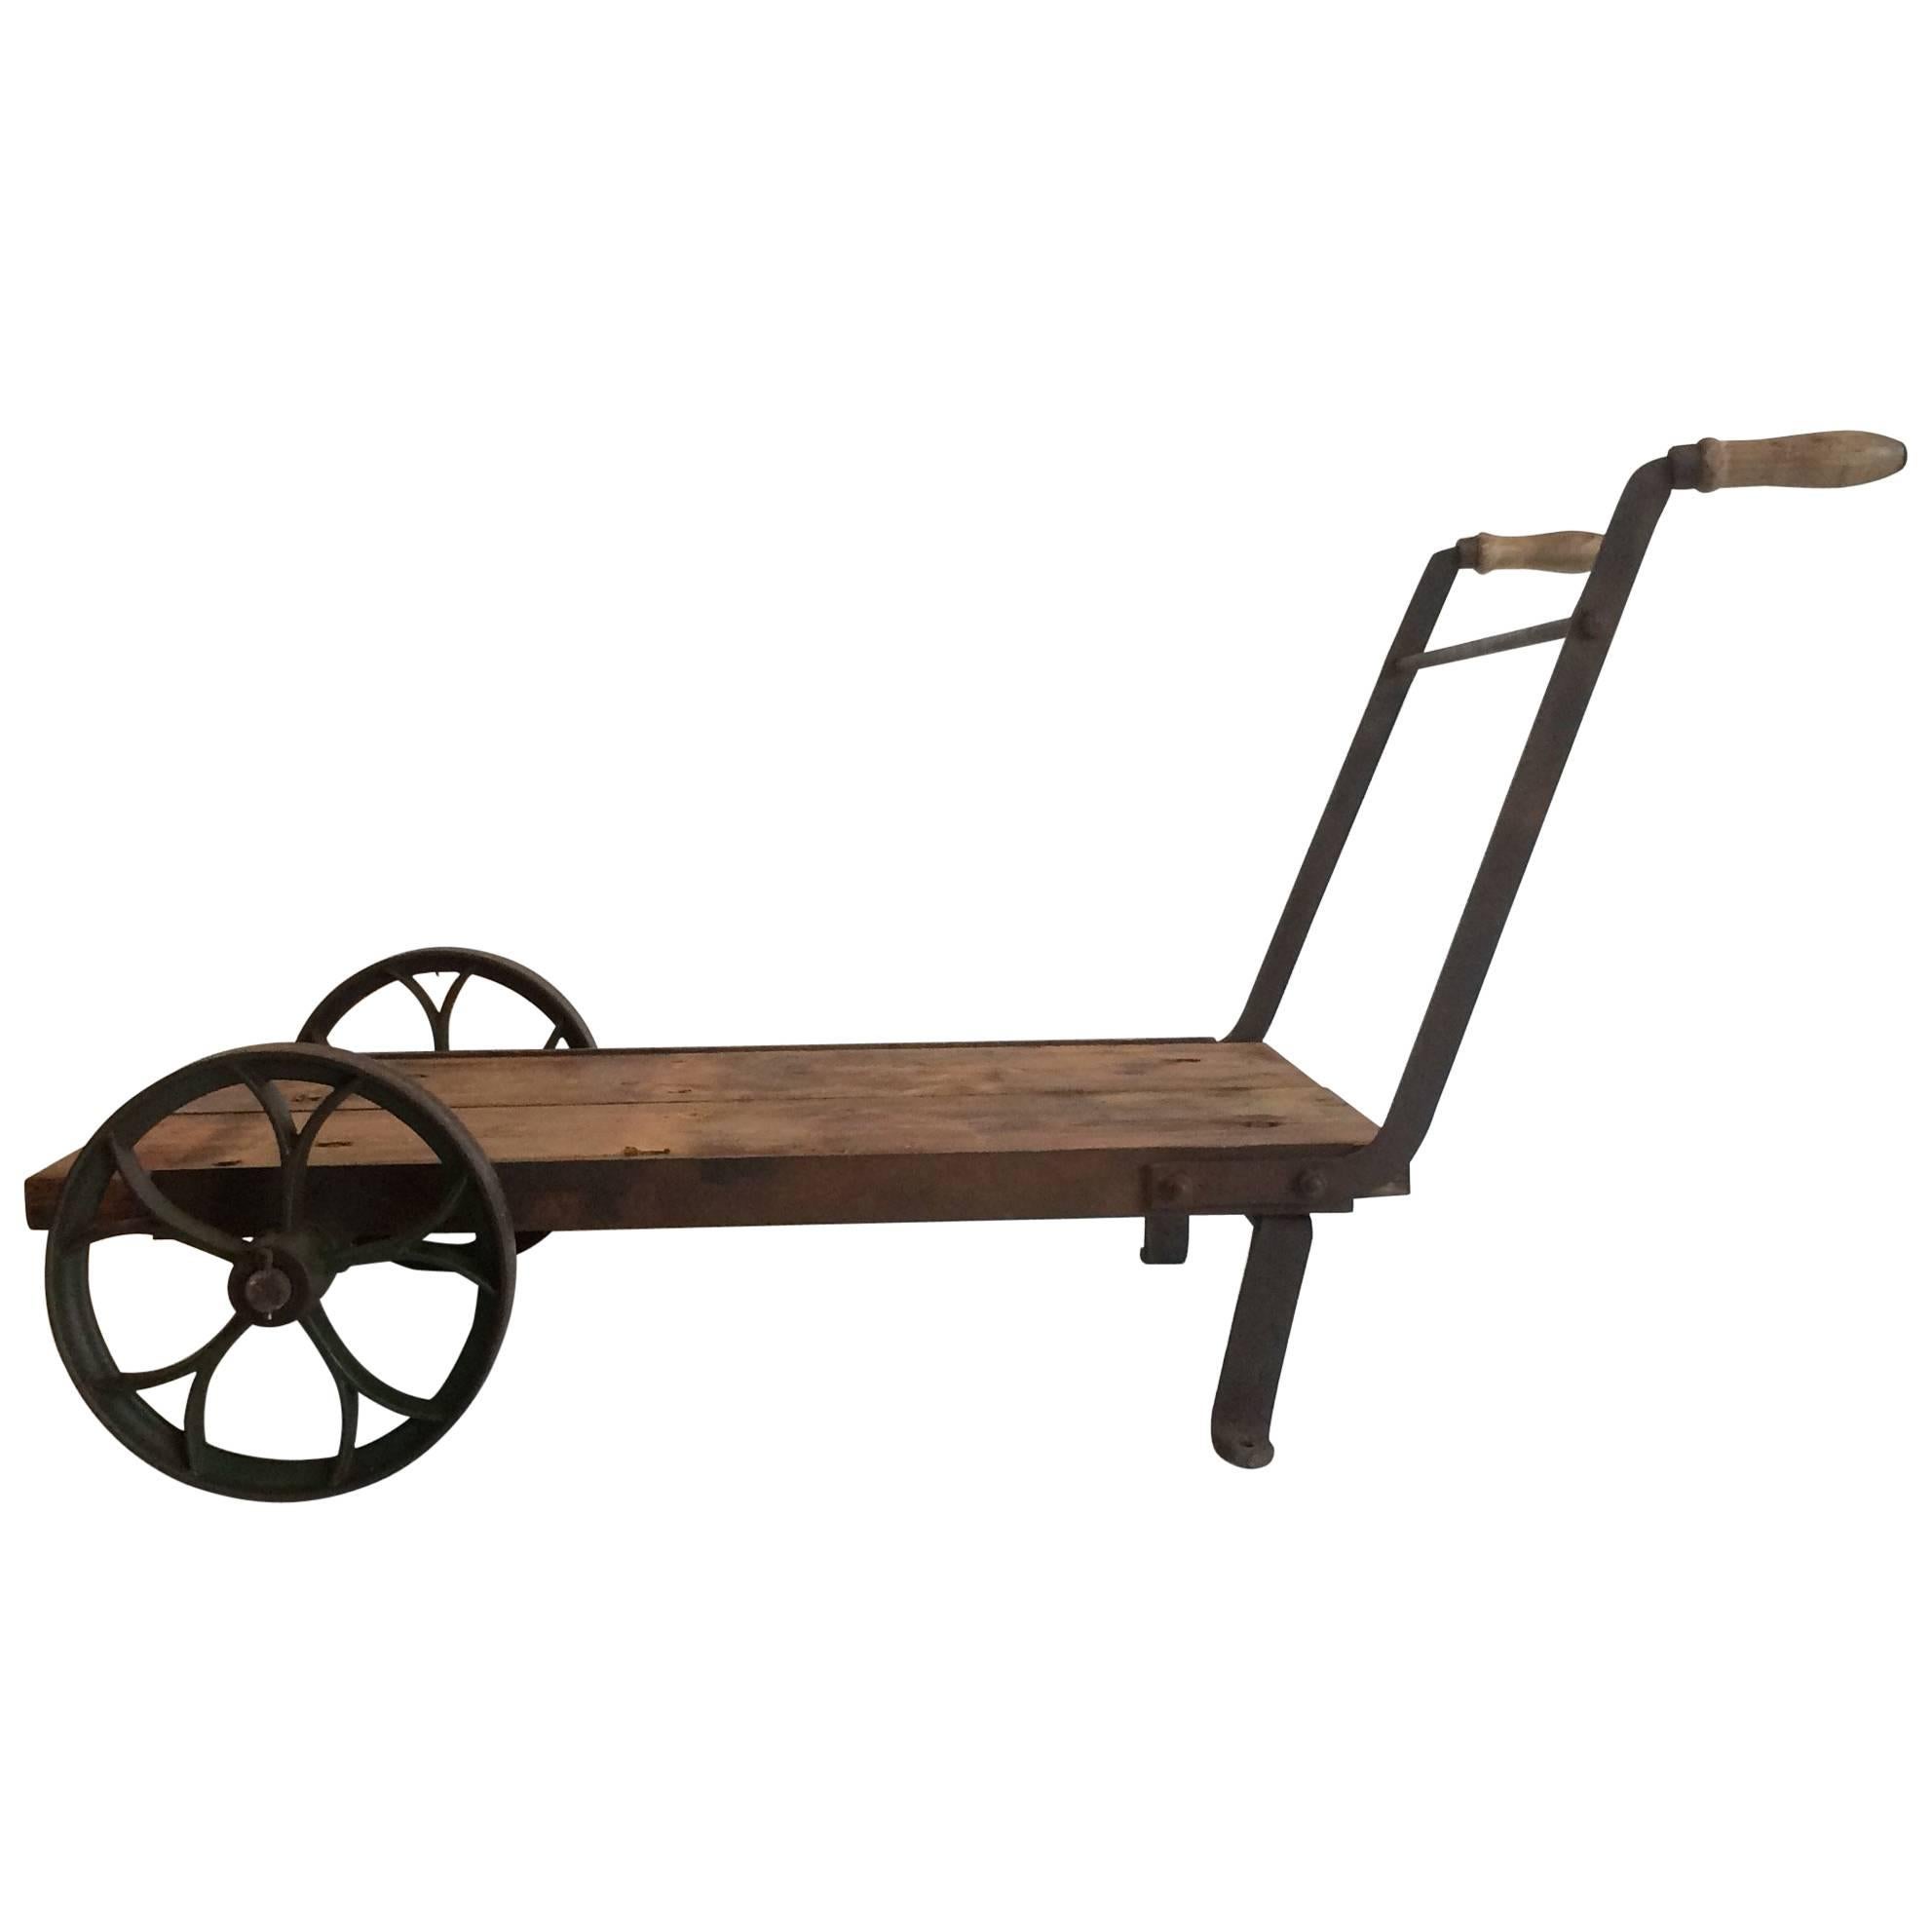 1860 Industrial Vintage Trolley, Wheelbarrow or Cart Steel Wheeled Coffee Table For Sale